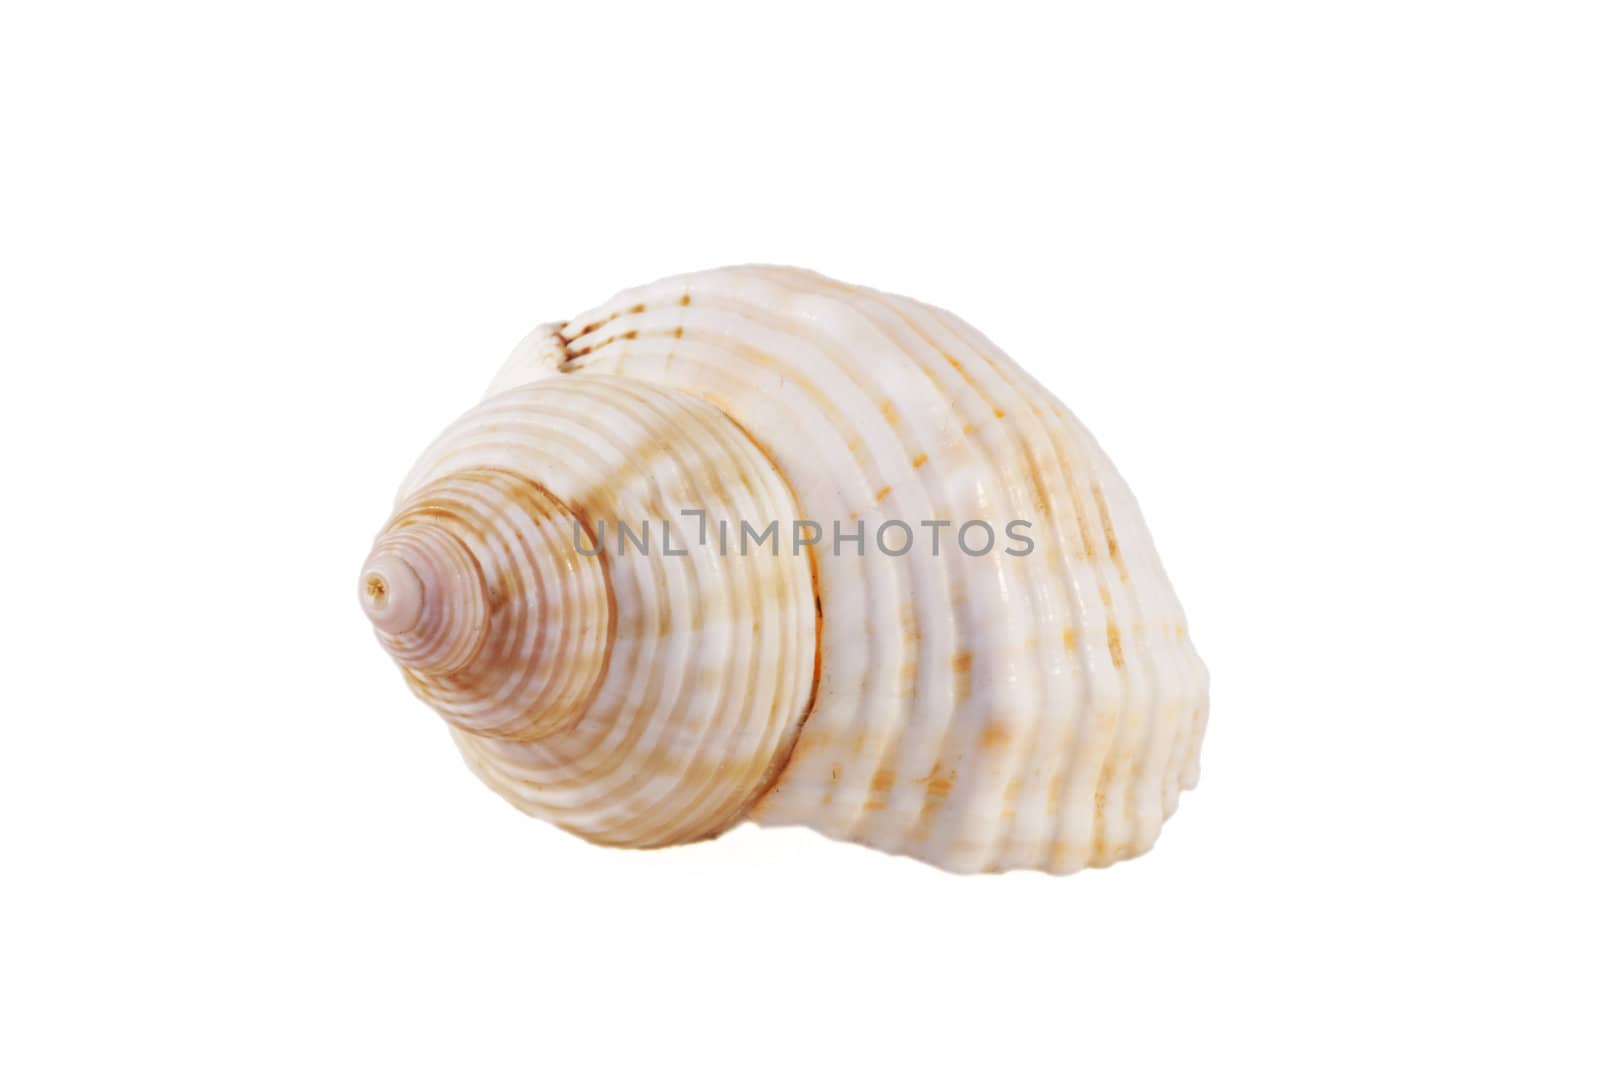 Seashell over white isolated background